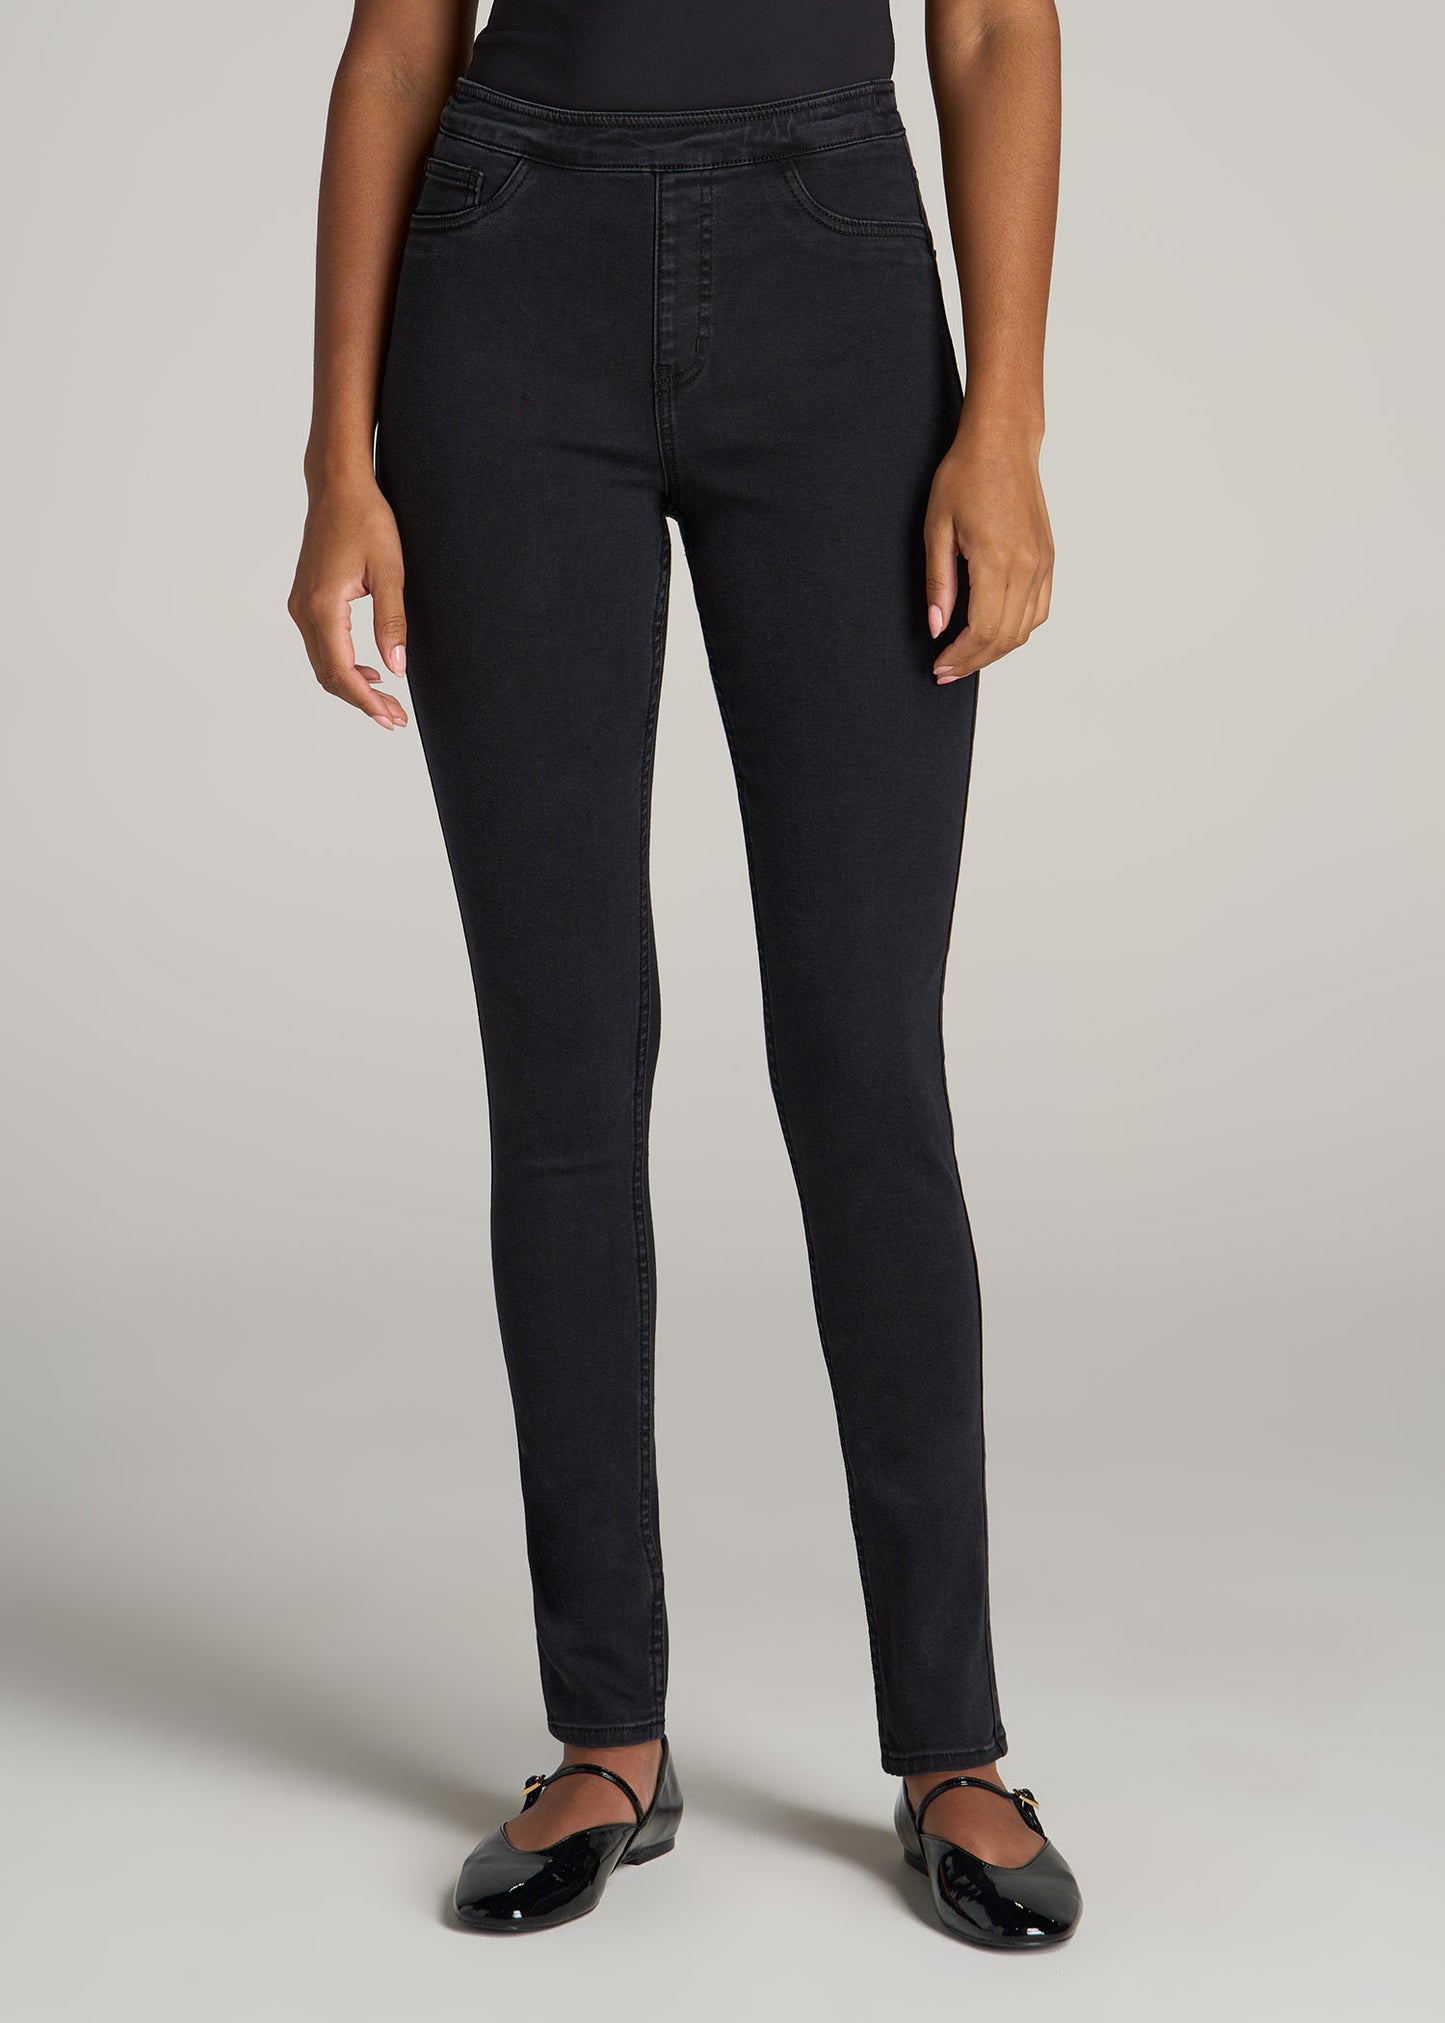 Womens Stretchy Skinny Jeggings Black Soft Leggings Jeans Pants Slim One  Size US